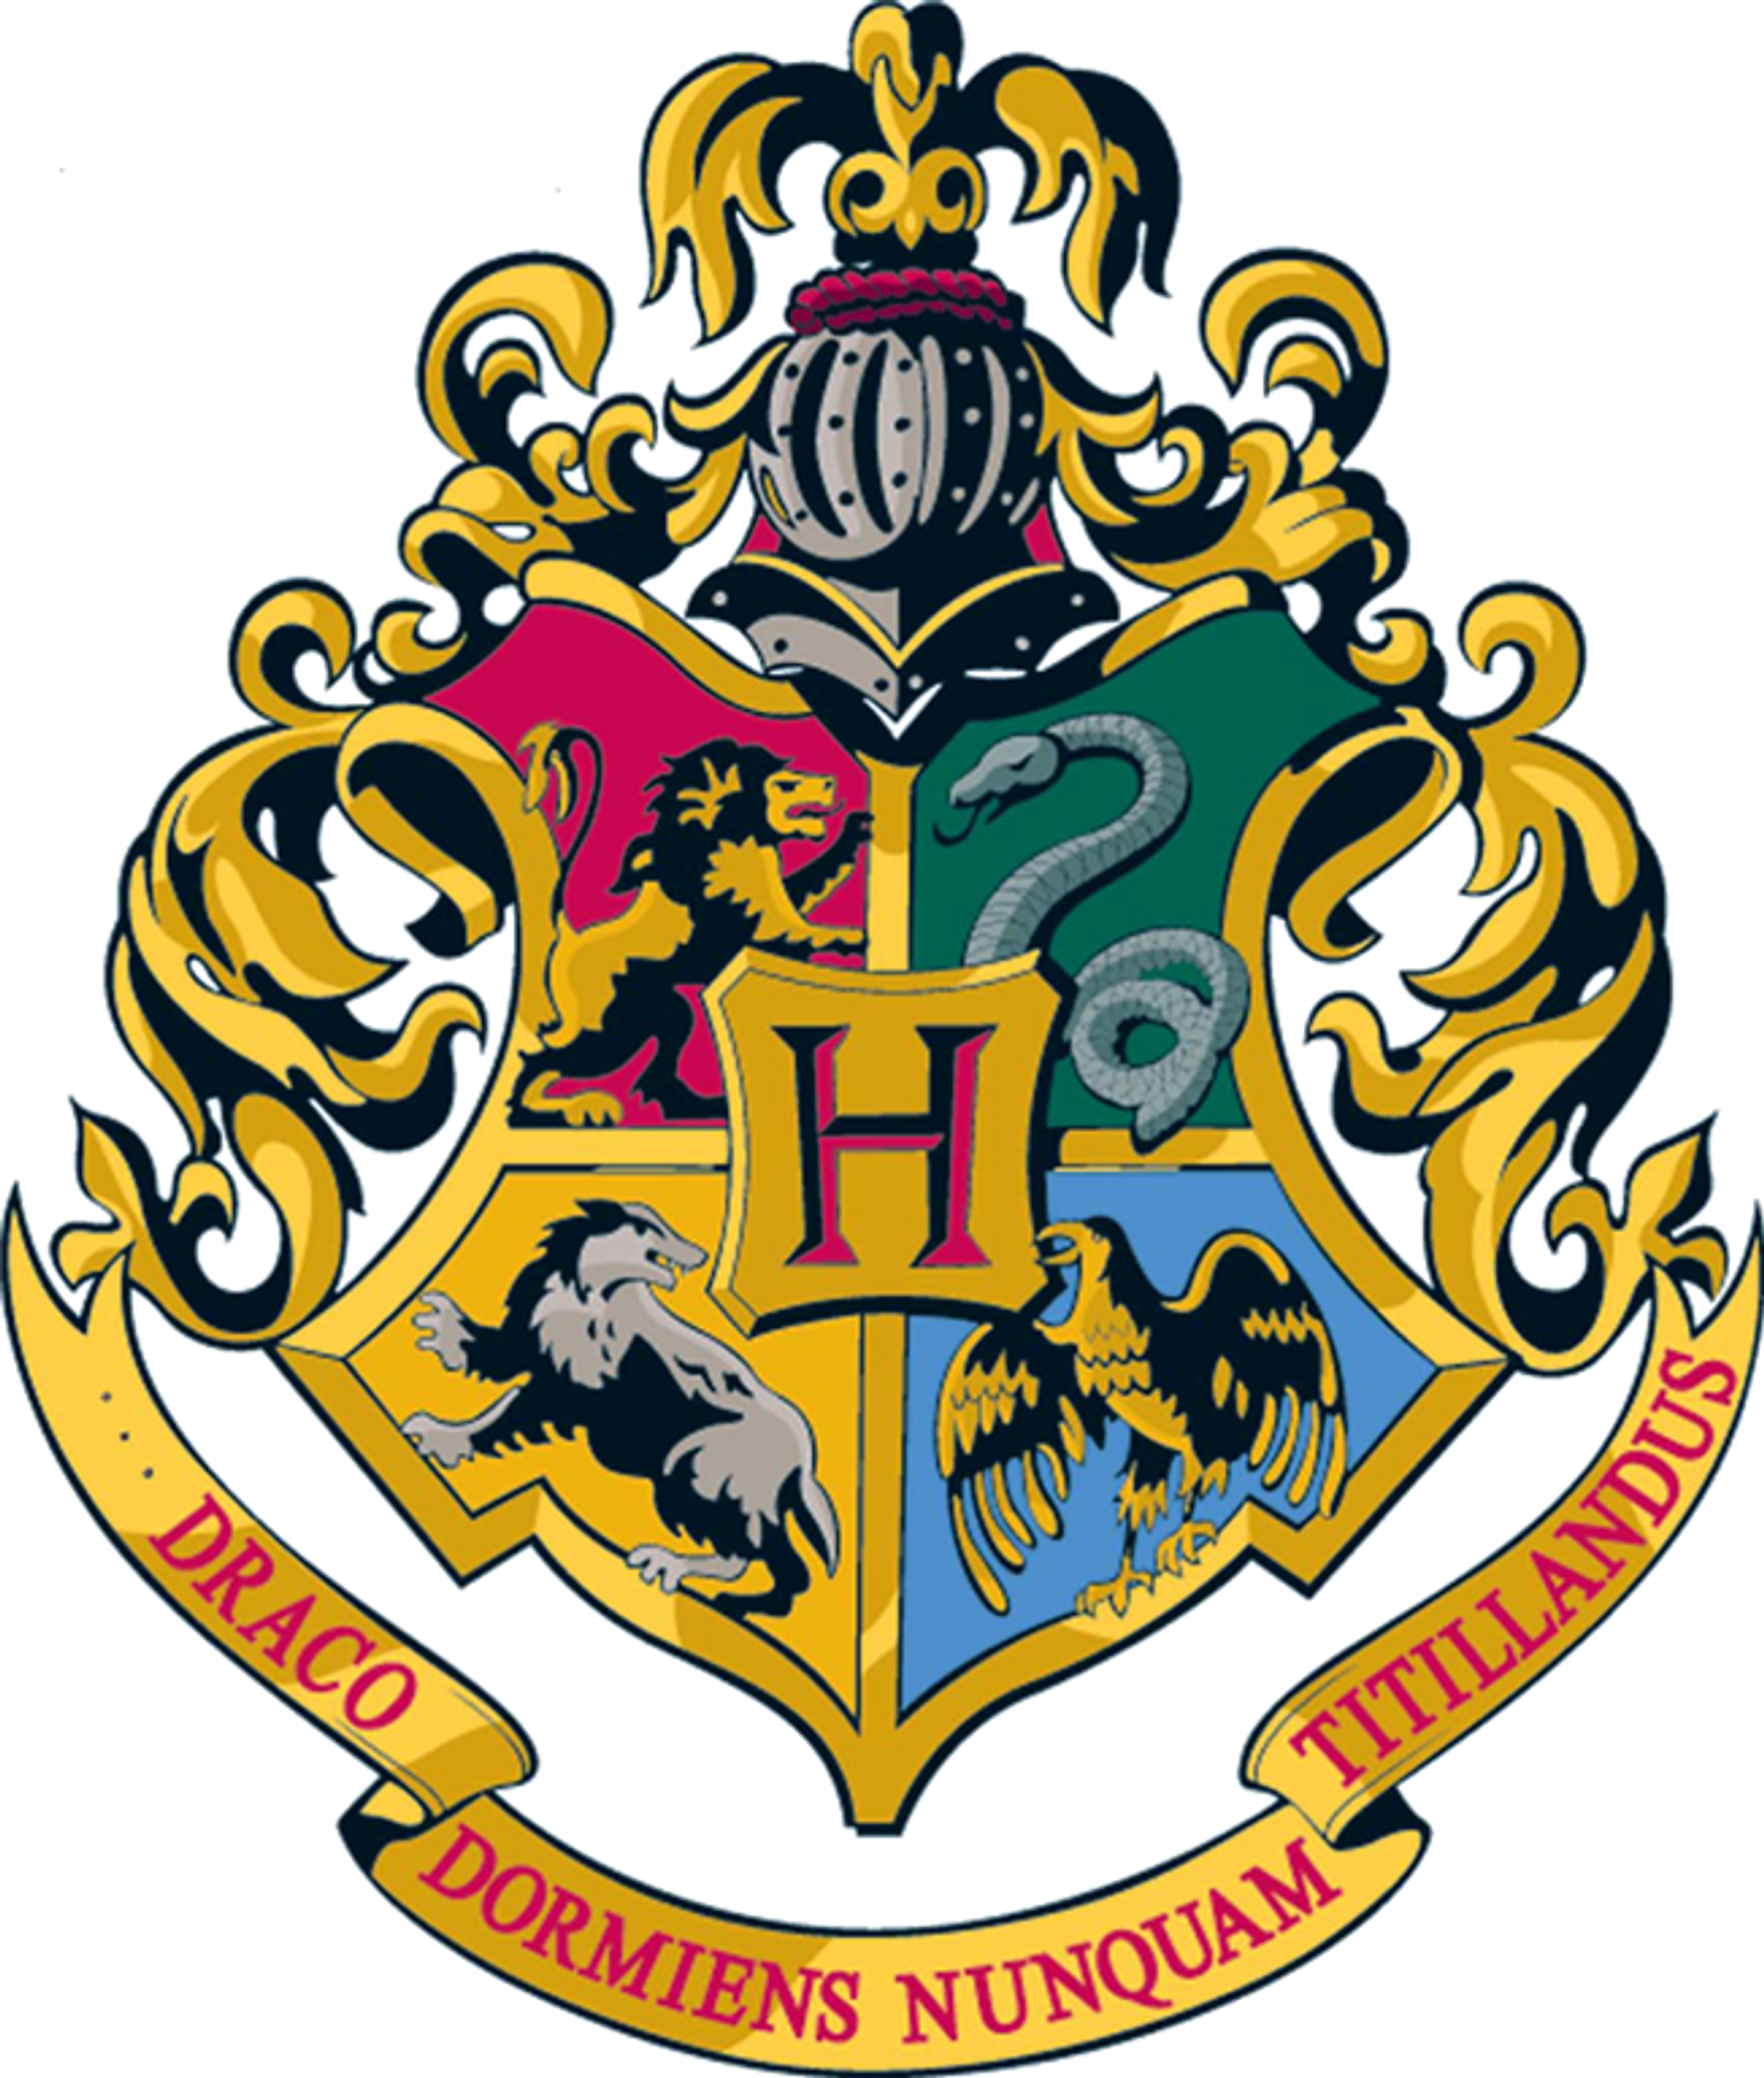 If Big Ten Schools Were Sorted Into Hogwarts Houses